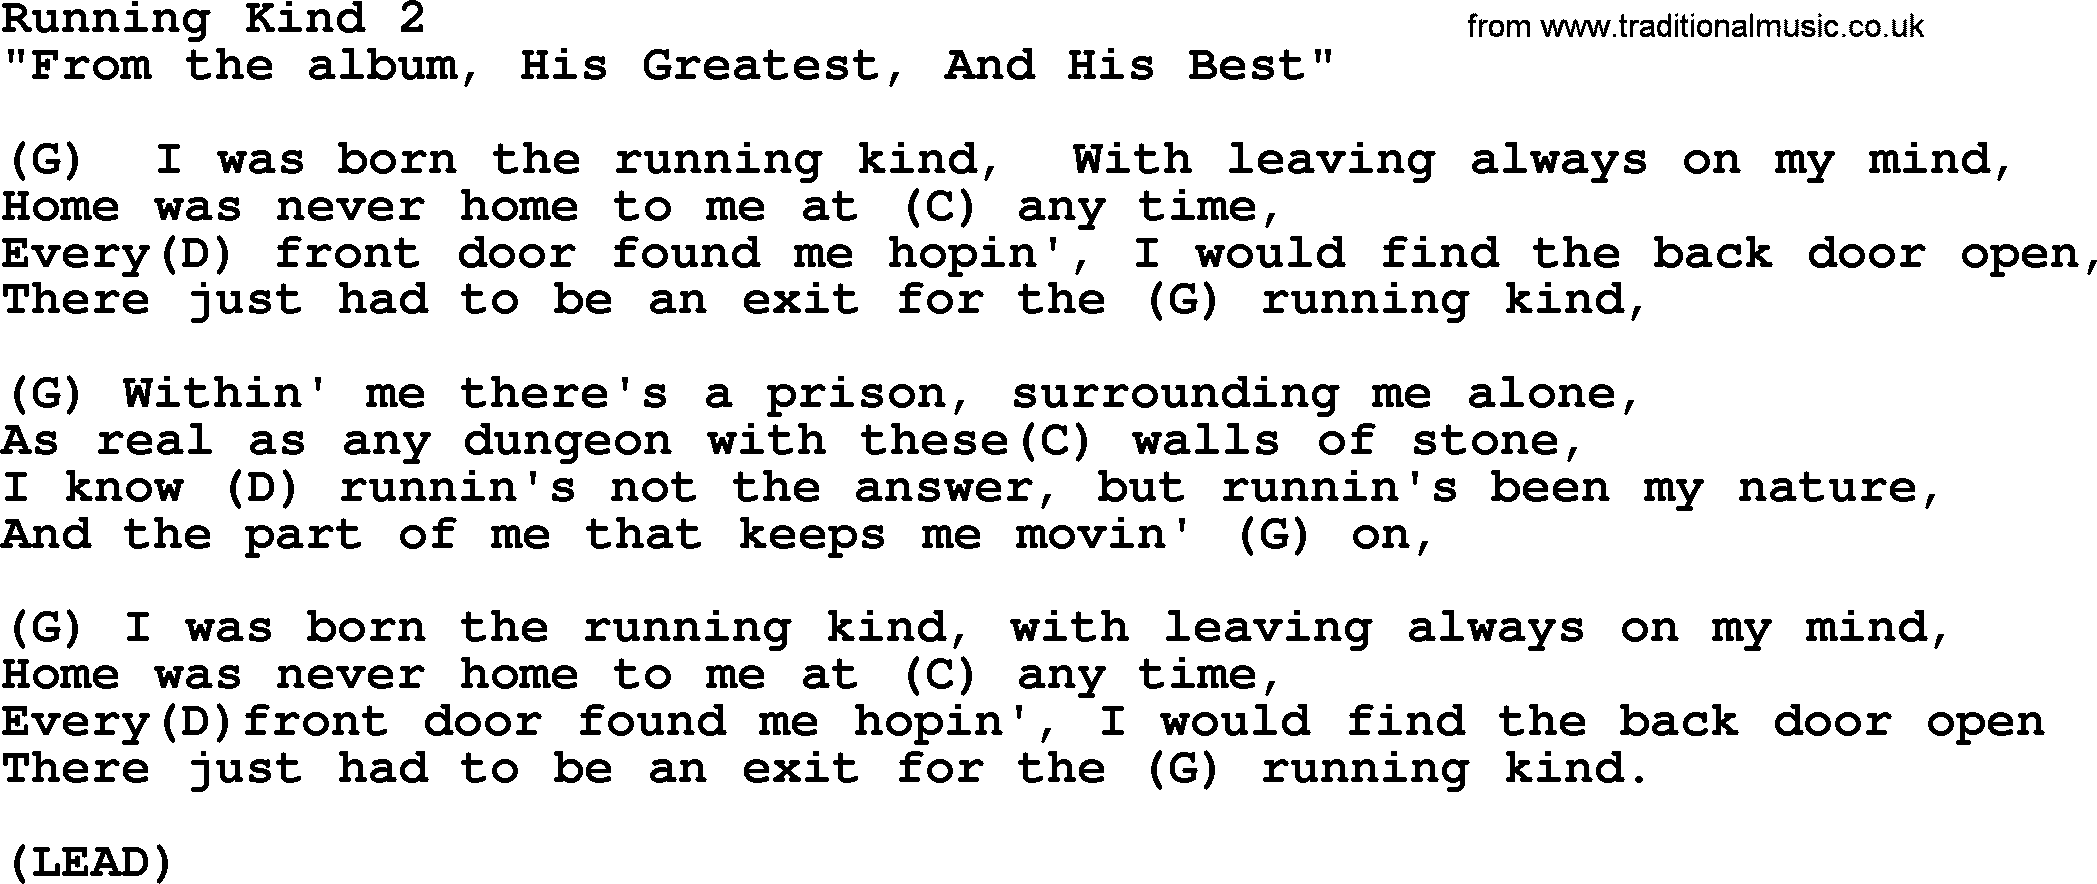 Merle Haggard song: Running Kind 2, lyrics and chords